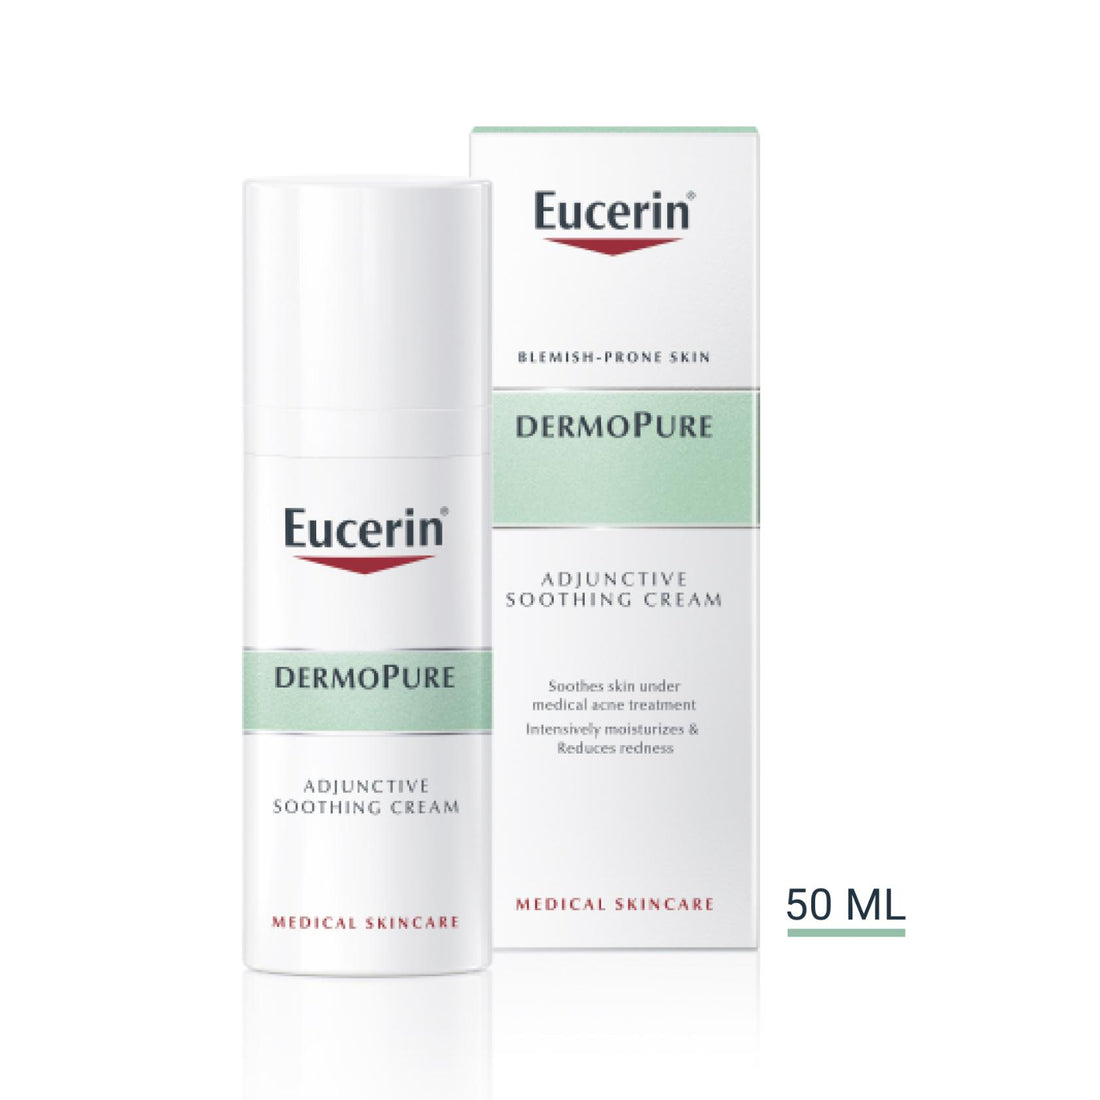 Eucerin DermoPure Oil Control Adjunctive Soothing Cream 50ml